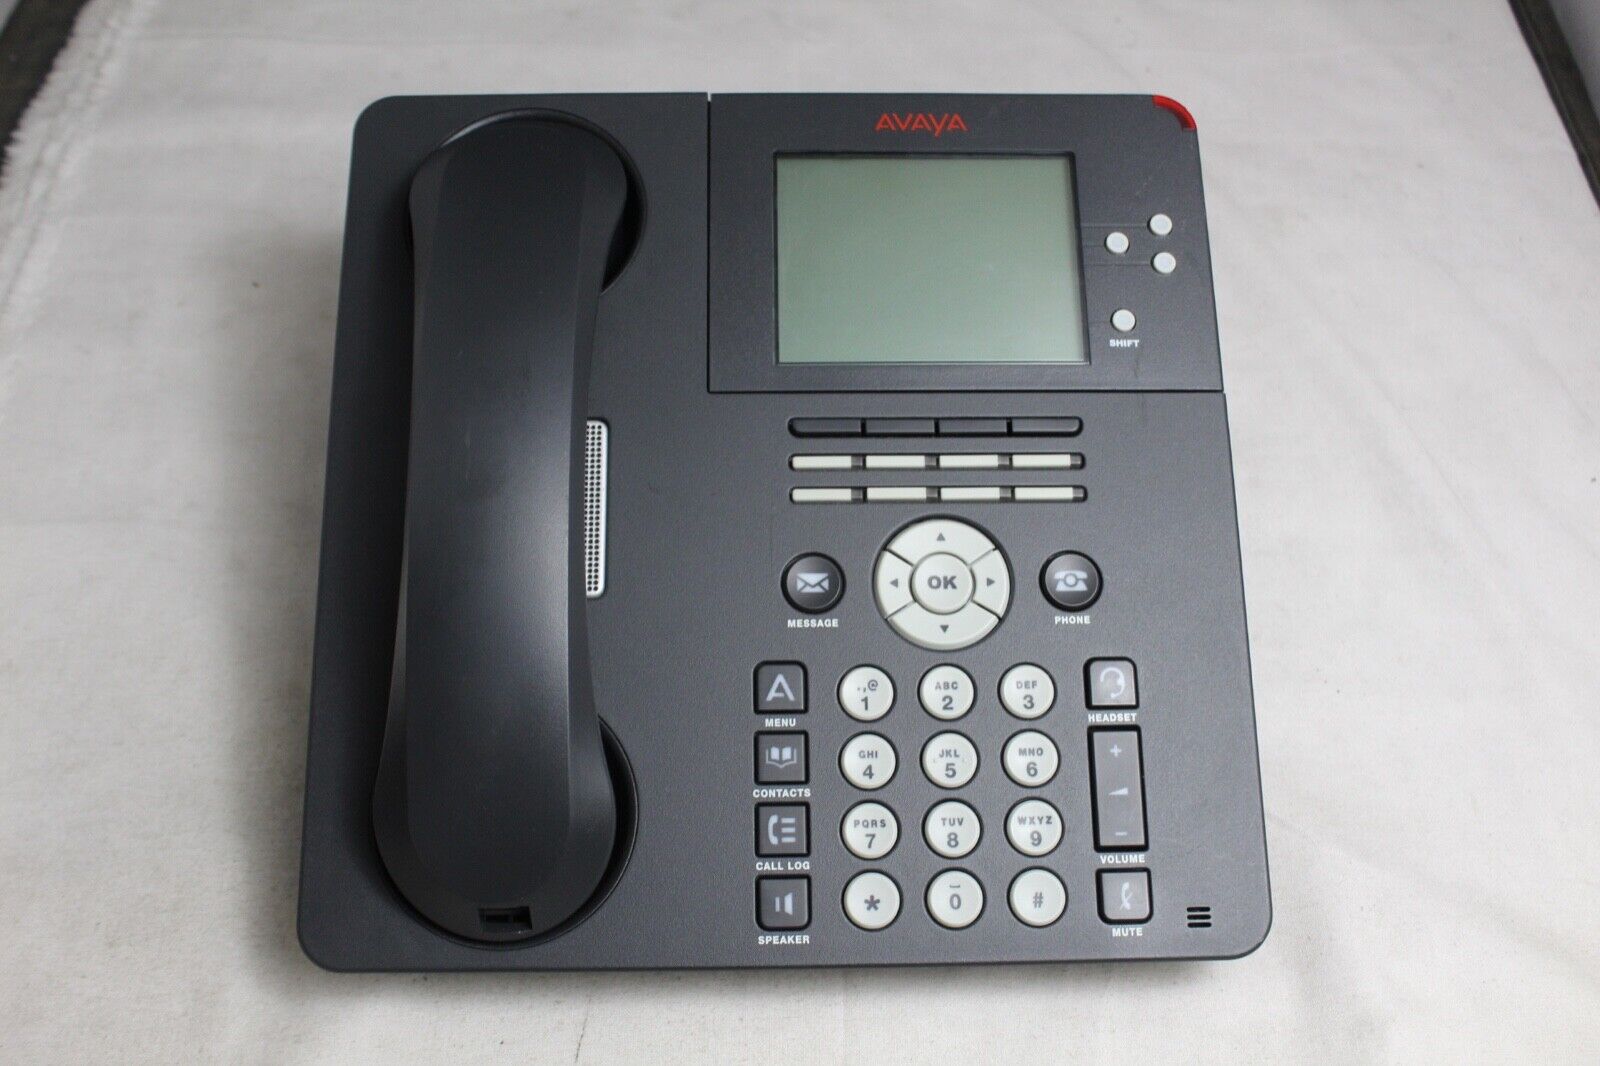 Lot of 10 Avaya 9650 Office IP Phones 700383938 - Grade A Used